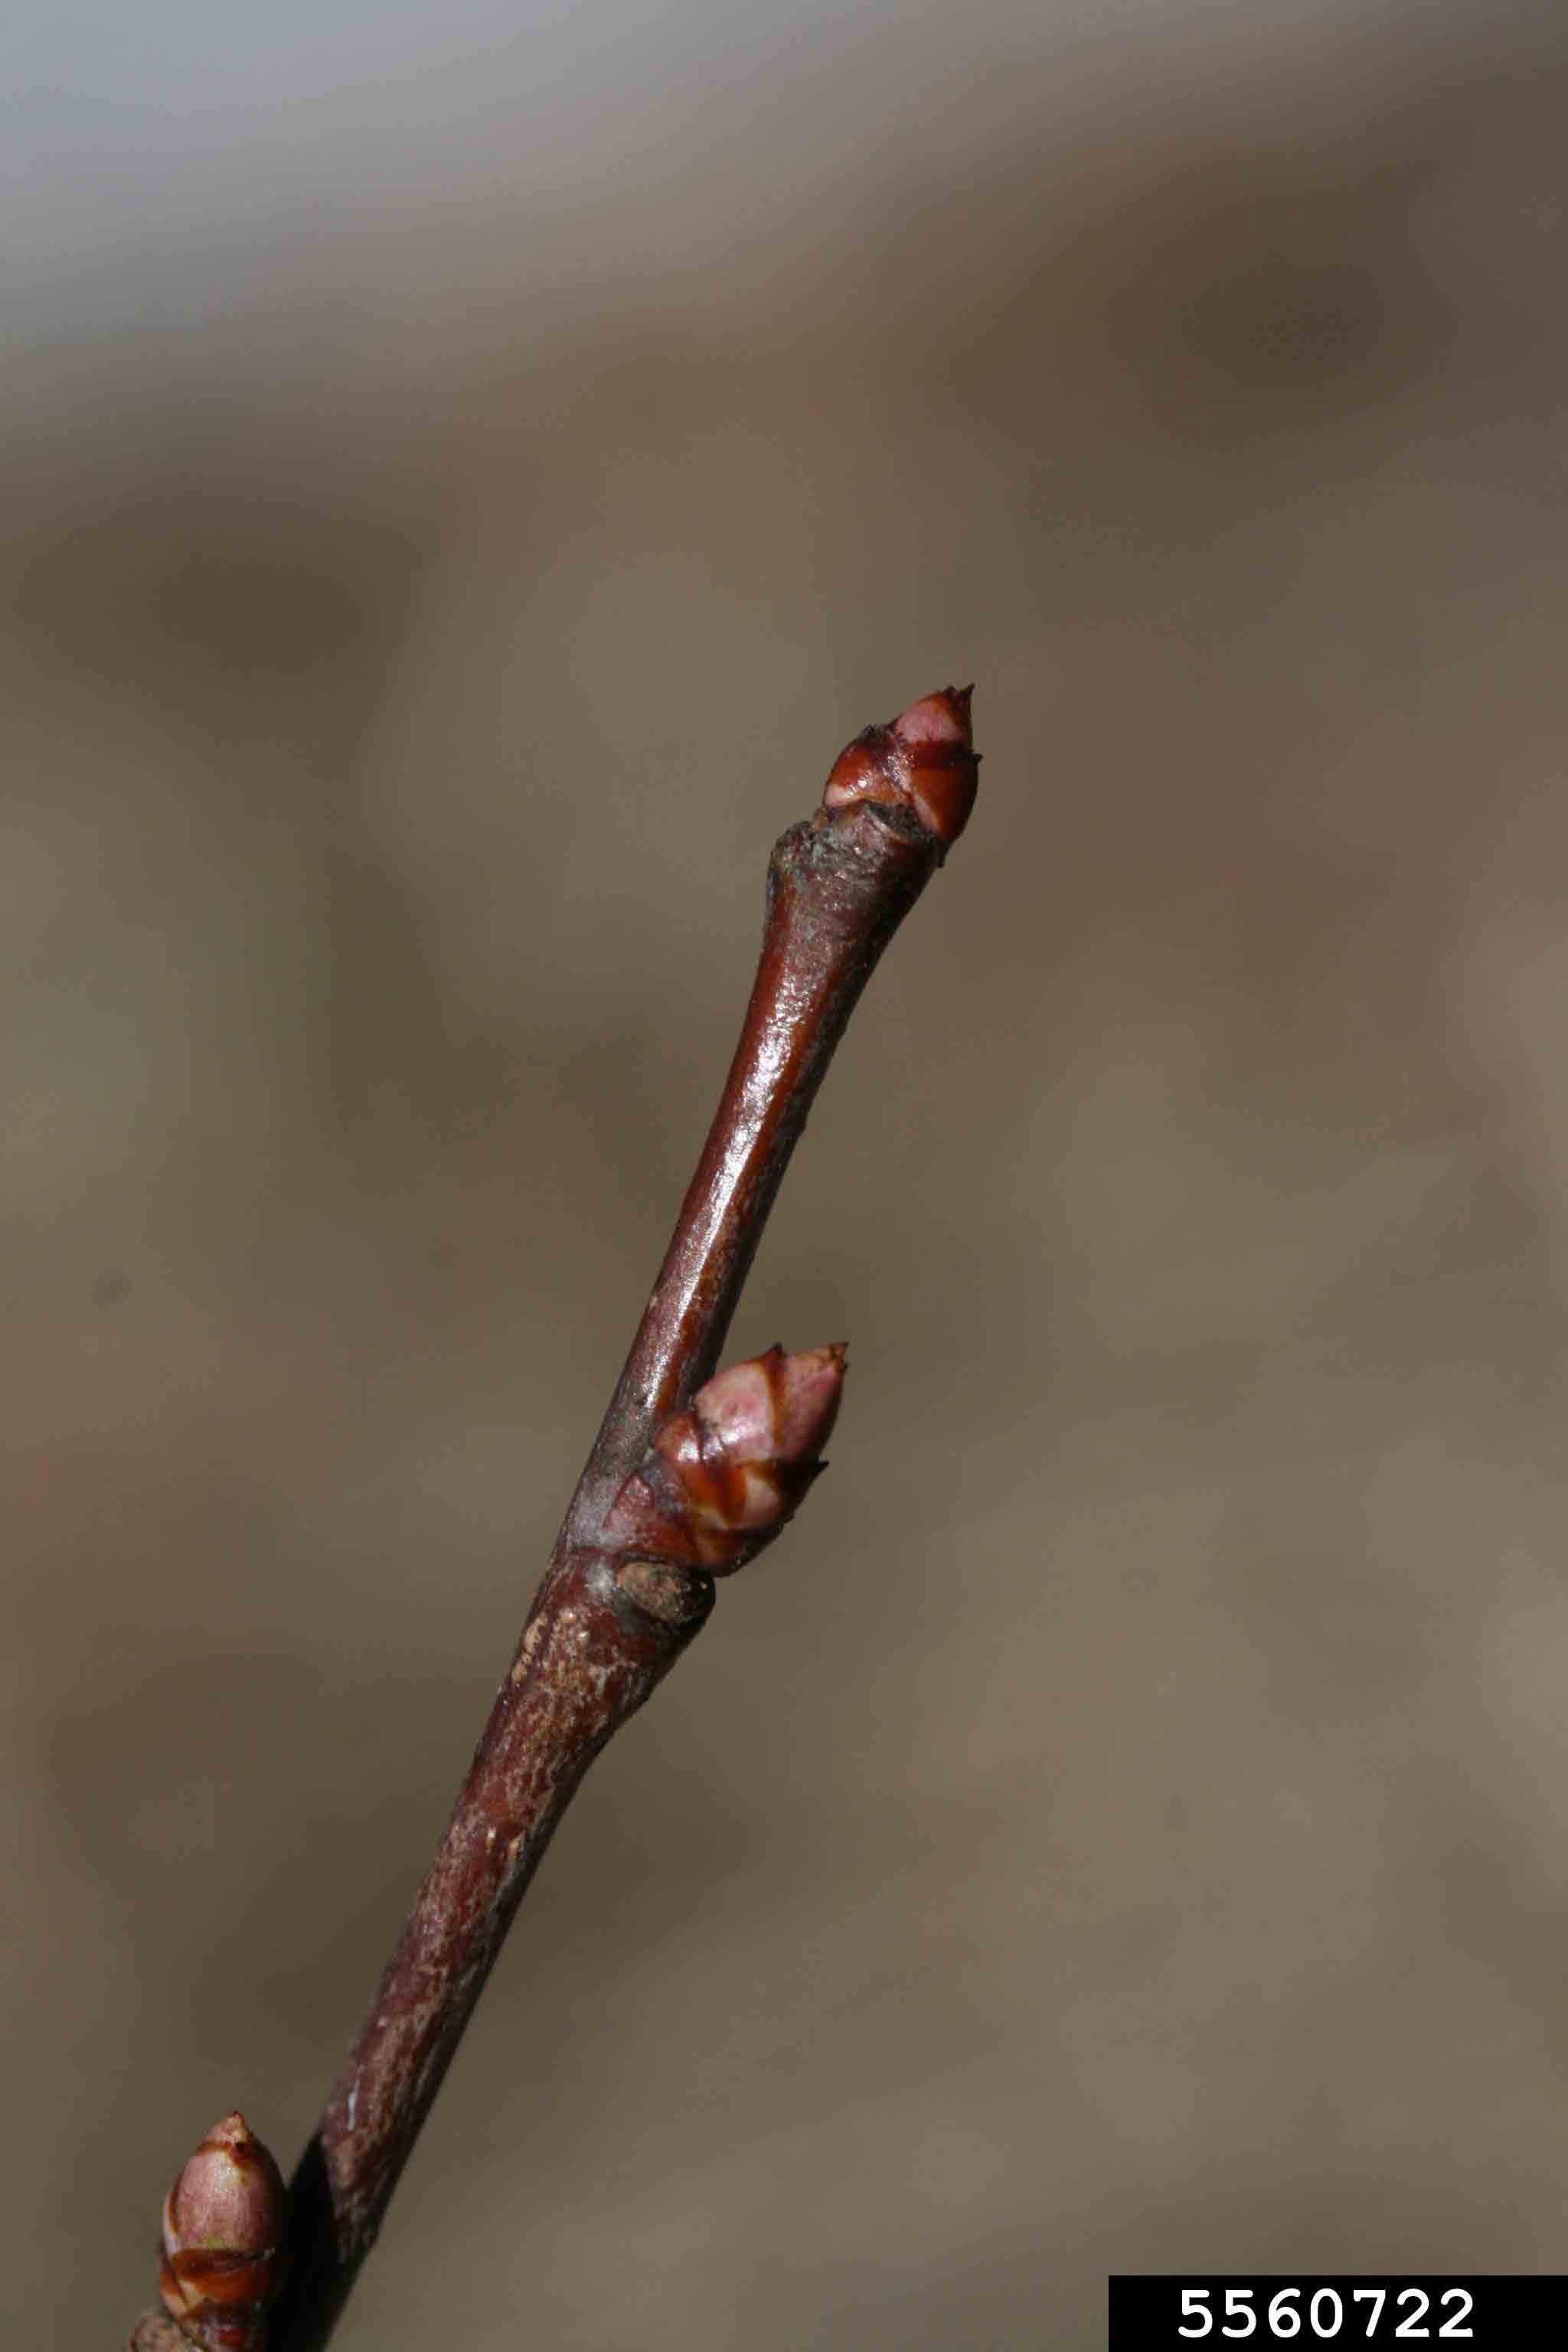 Black cherry twig with bud